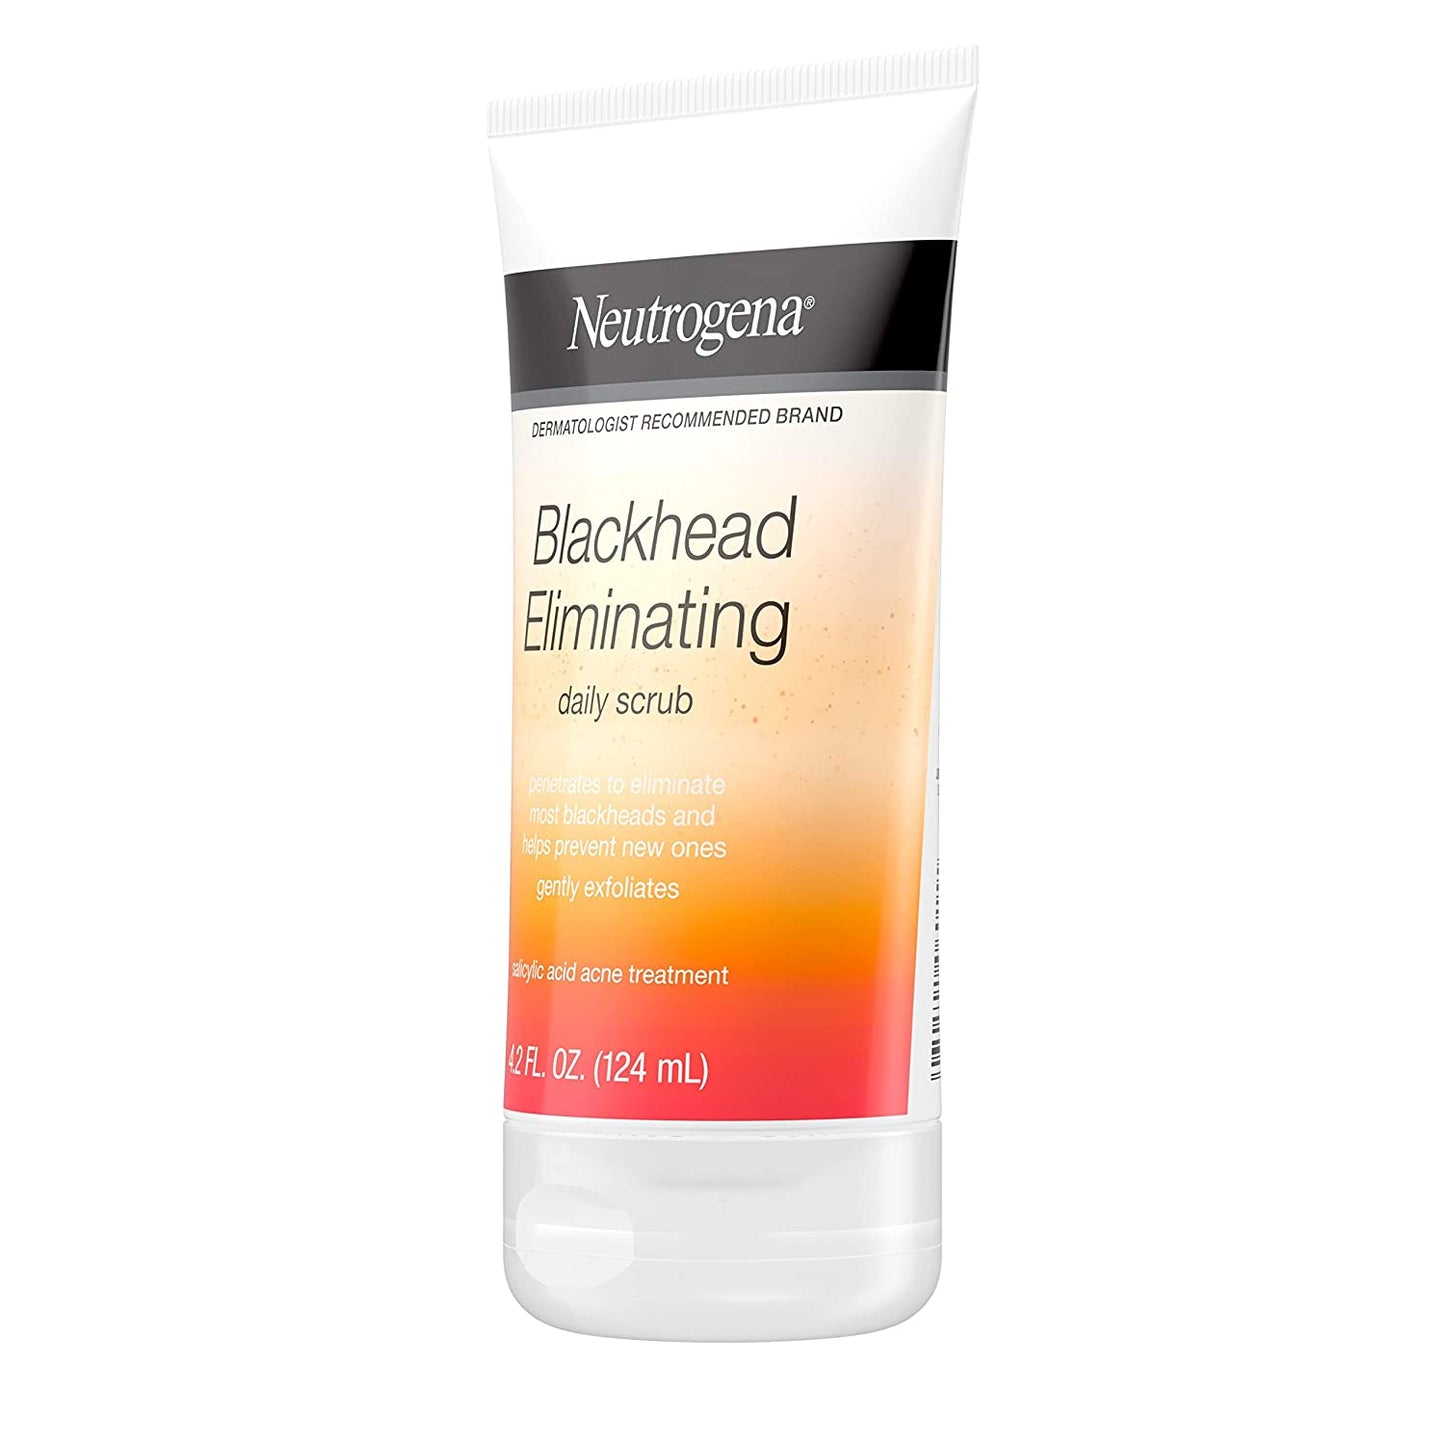 Neutrogena Blackhead Eliminating Daily Facial Scrub With Salicylic Acid Acne Medicine, Exfoliating Face Wash for Blackheads, 4.2 oz